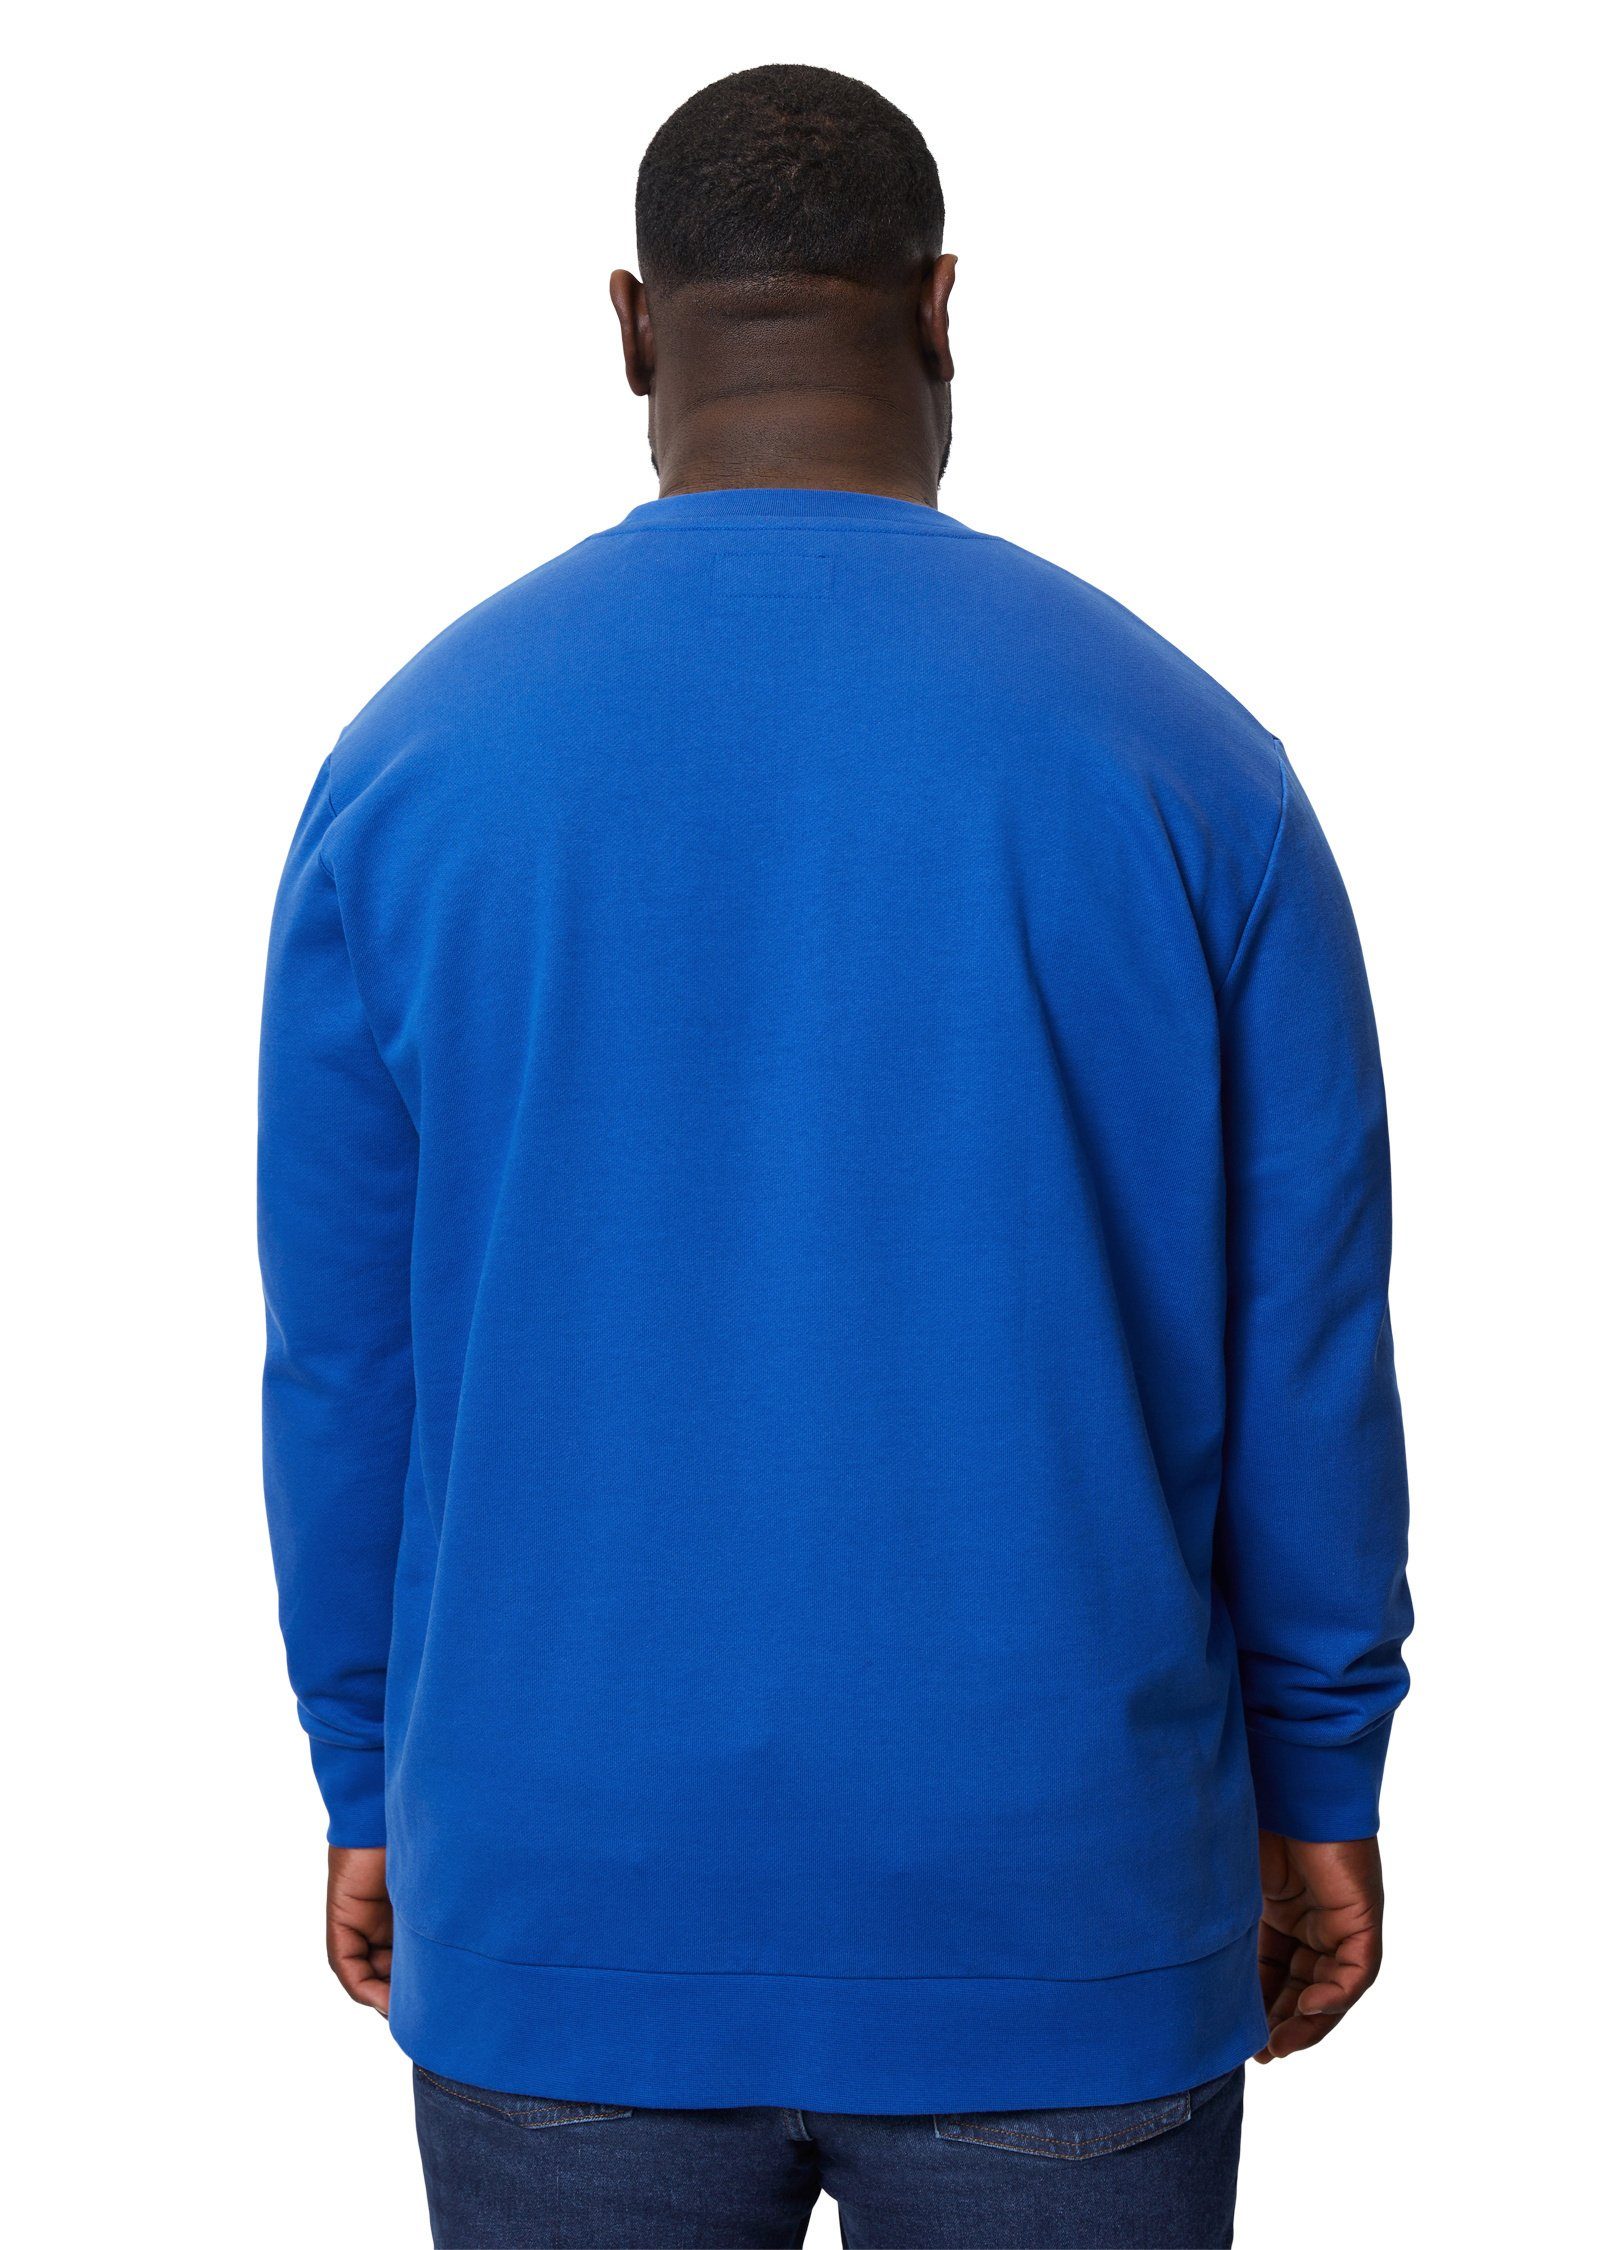 Marc O'Polo Sweatshirt blau Bio-Baumwolle aus reiner